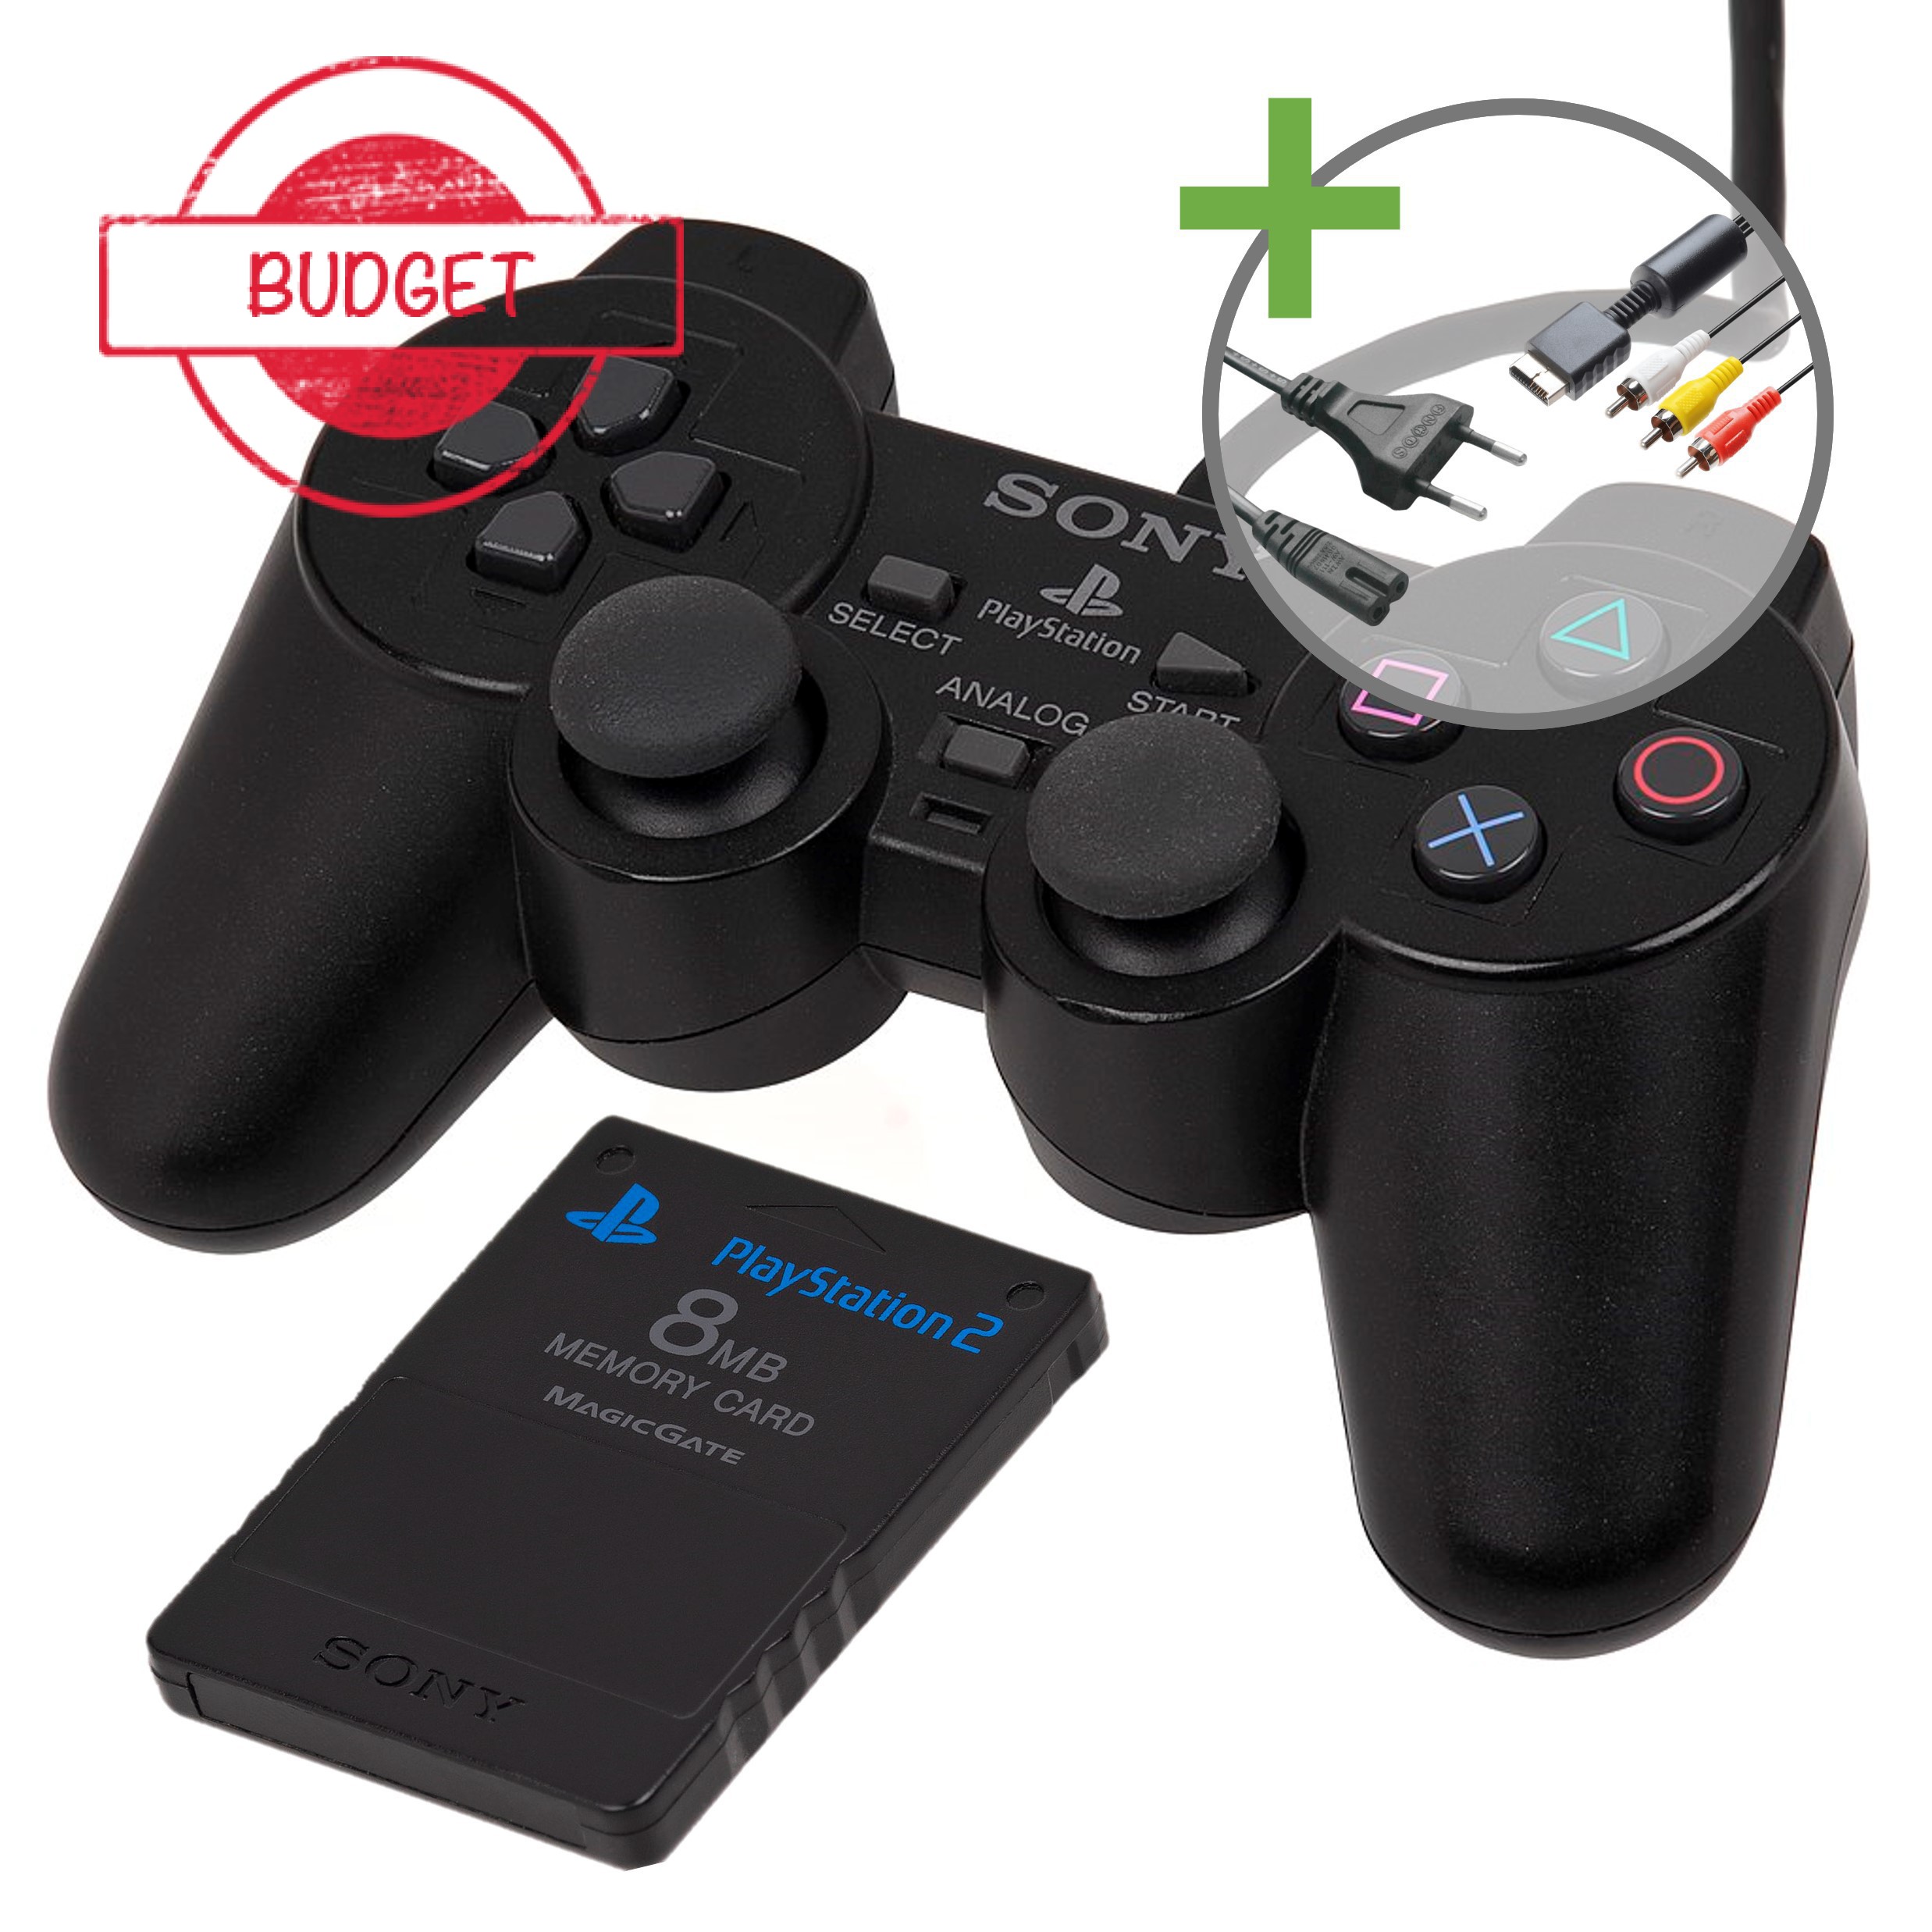 Sony PlayStation 2 Phat Starter Pack - Black Edition - Budget - Playstation 2 Hardware - 4